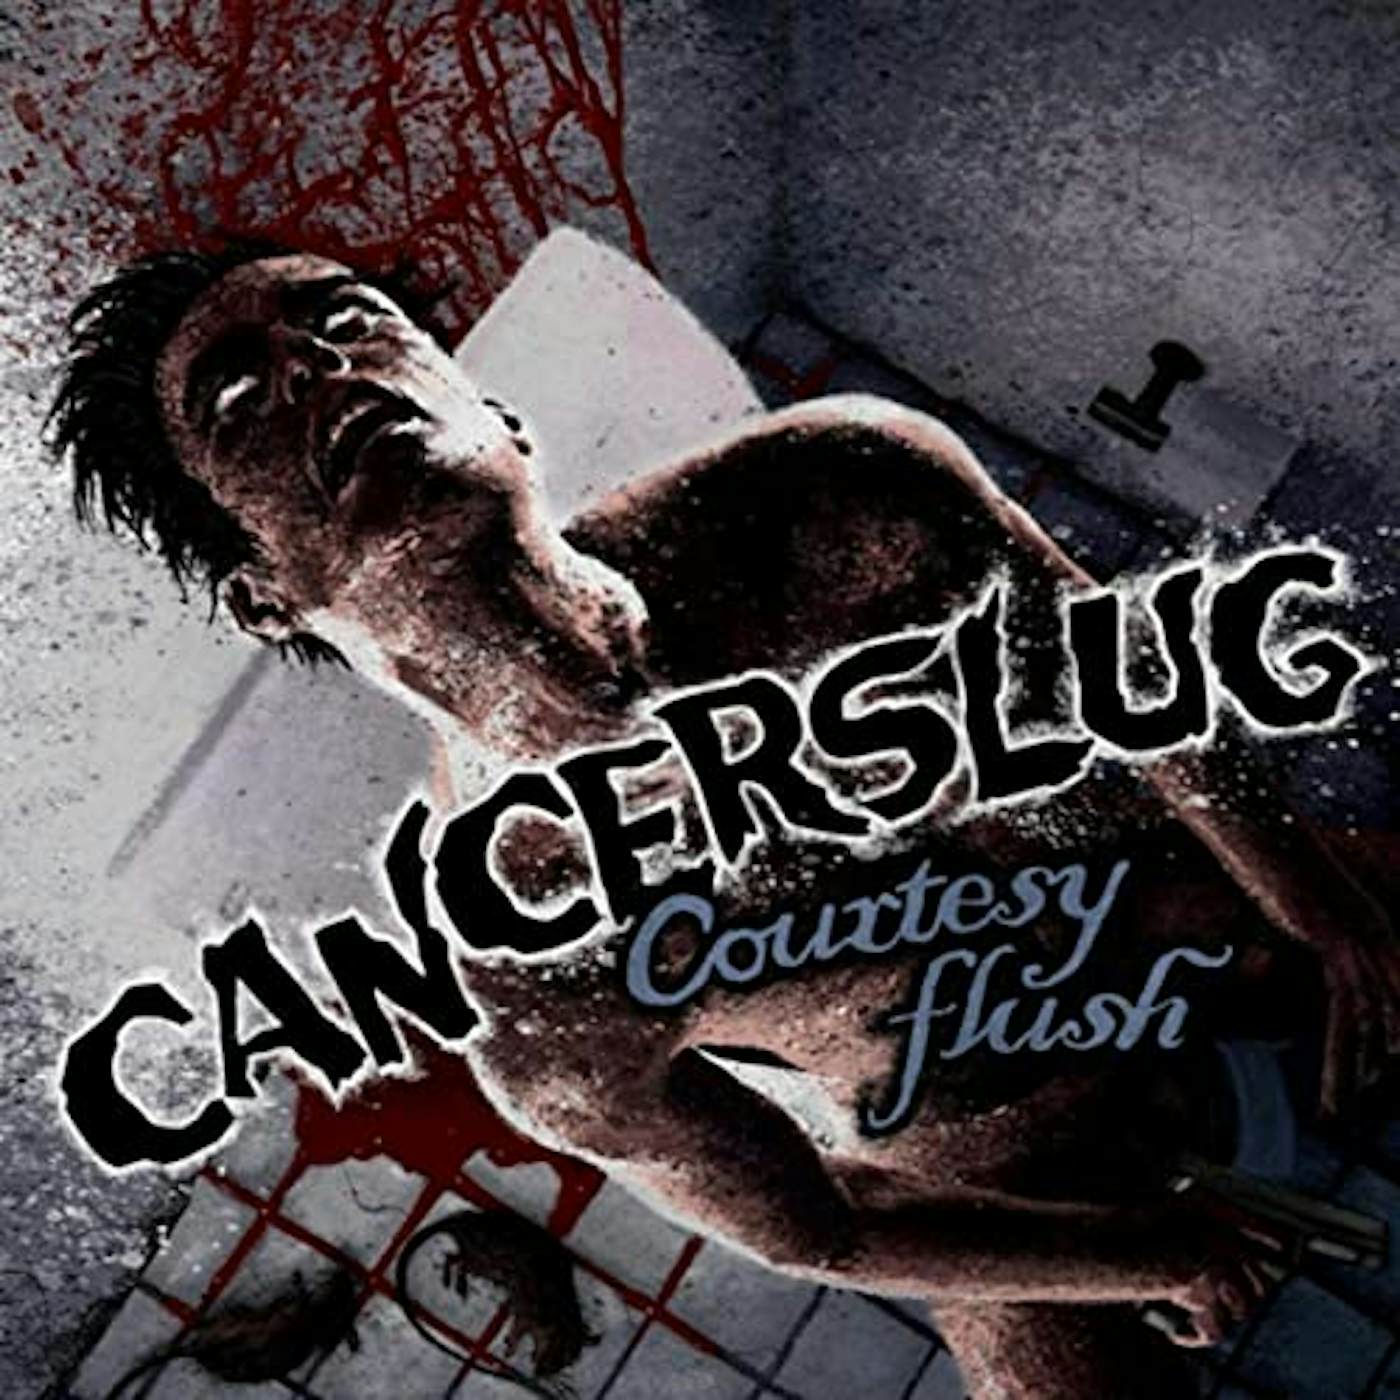 Cancerslug COURTESY FLUSH CD